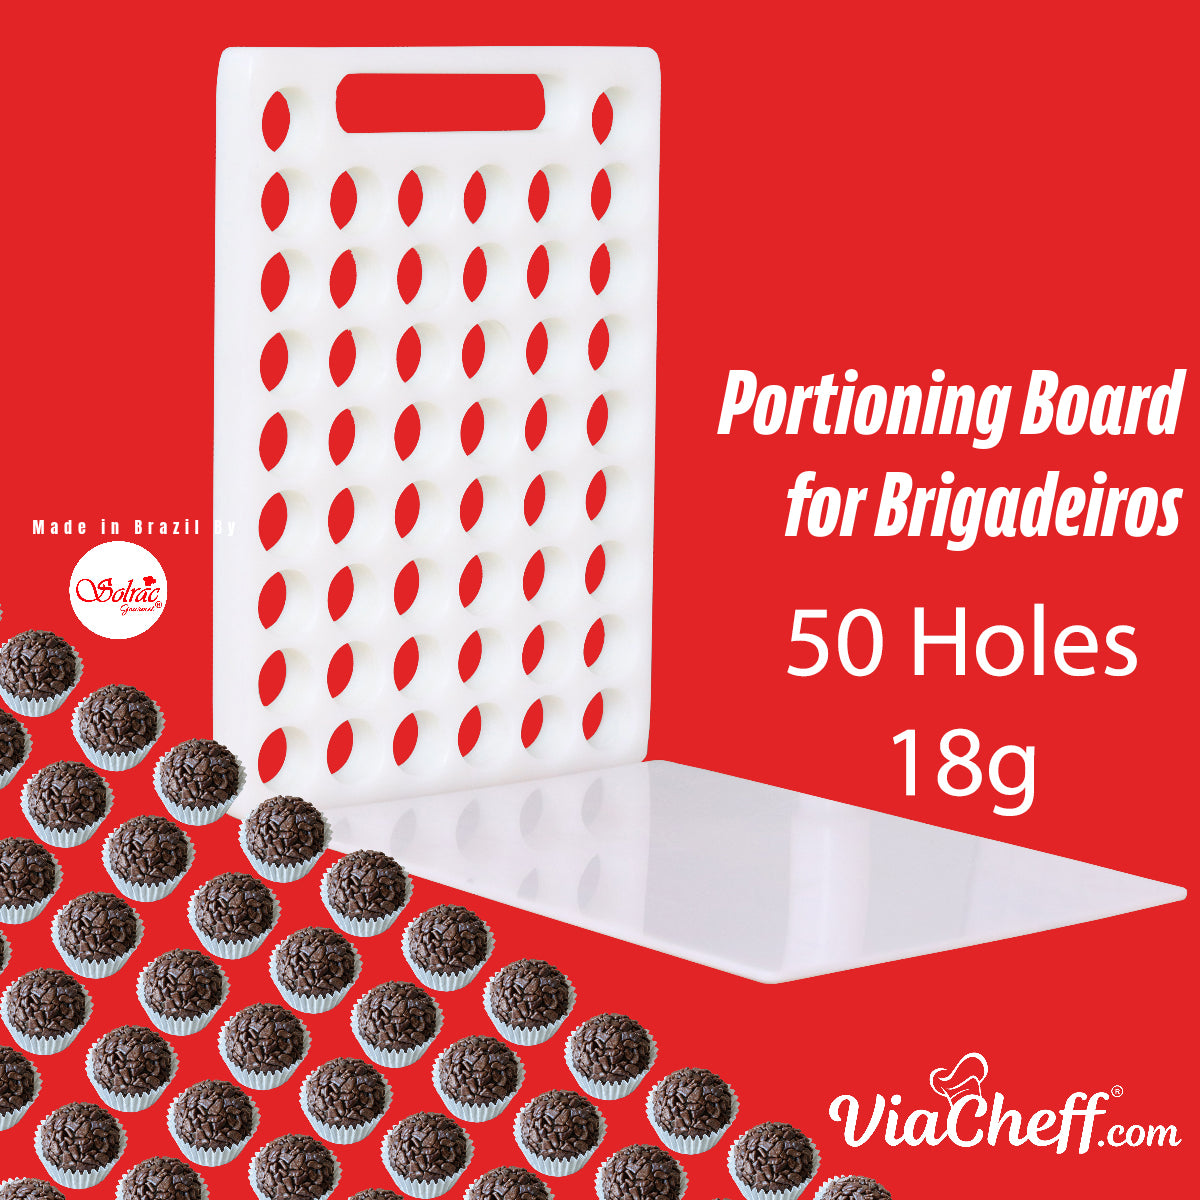 Portioning Board for 18g Brigadeiros (50 Holes)